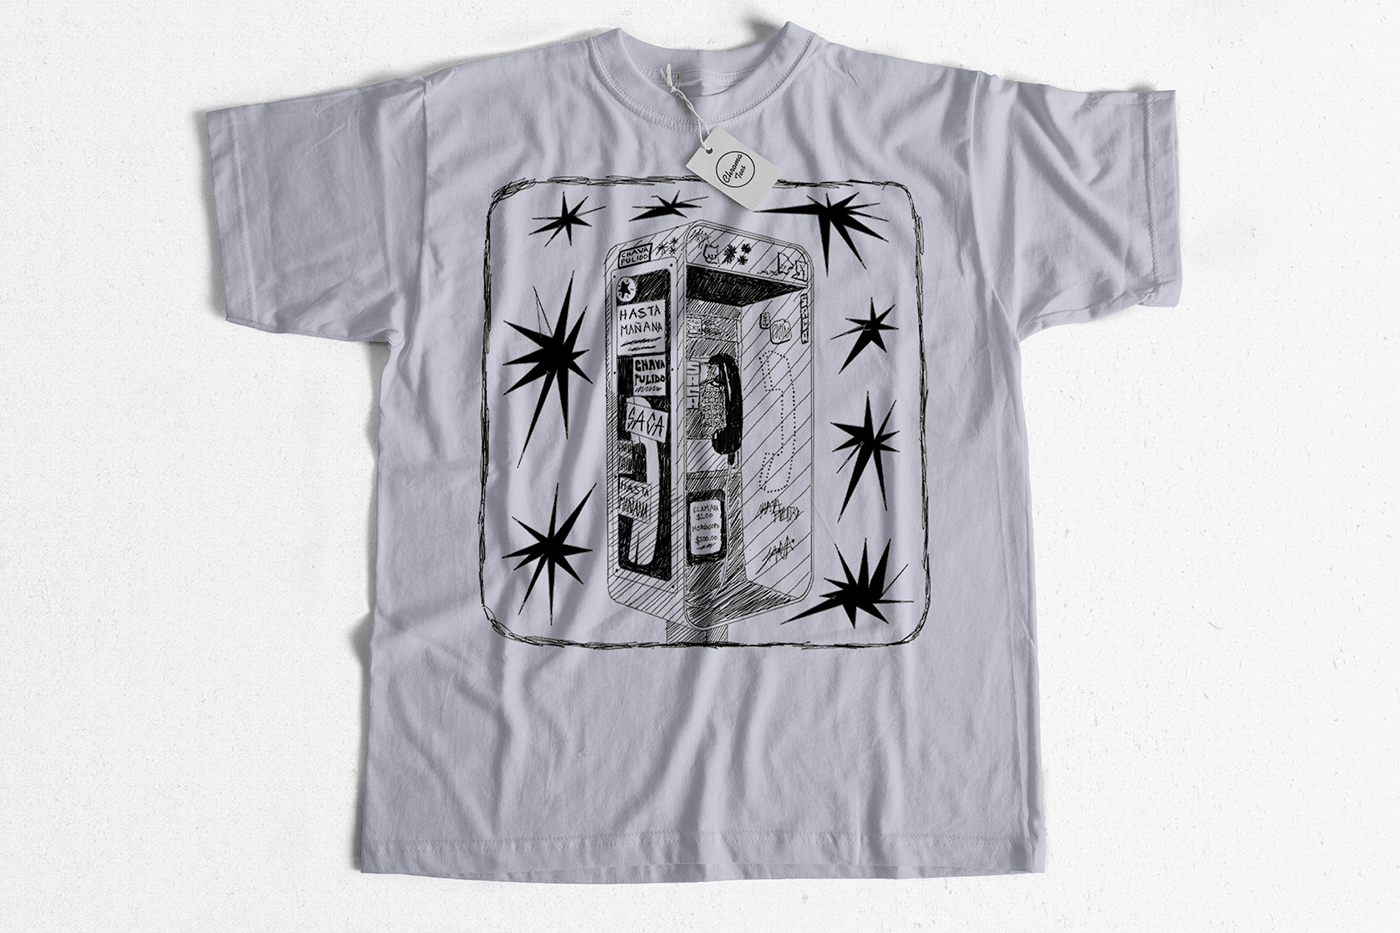 diseño grafitti T Shirt Portada Single musica diseño gráfico Camioneta ep Telefono publico